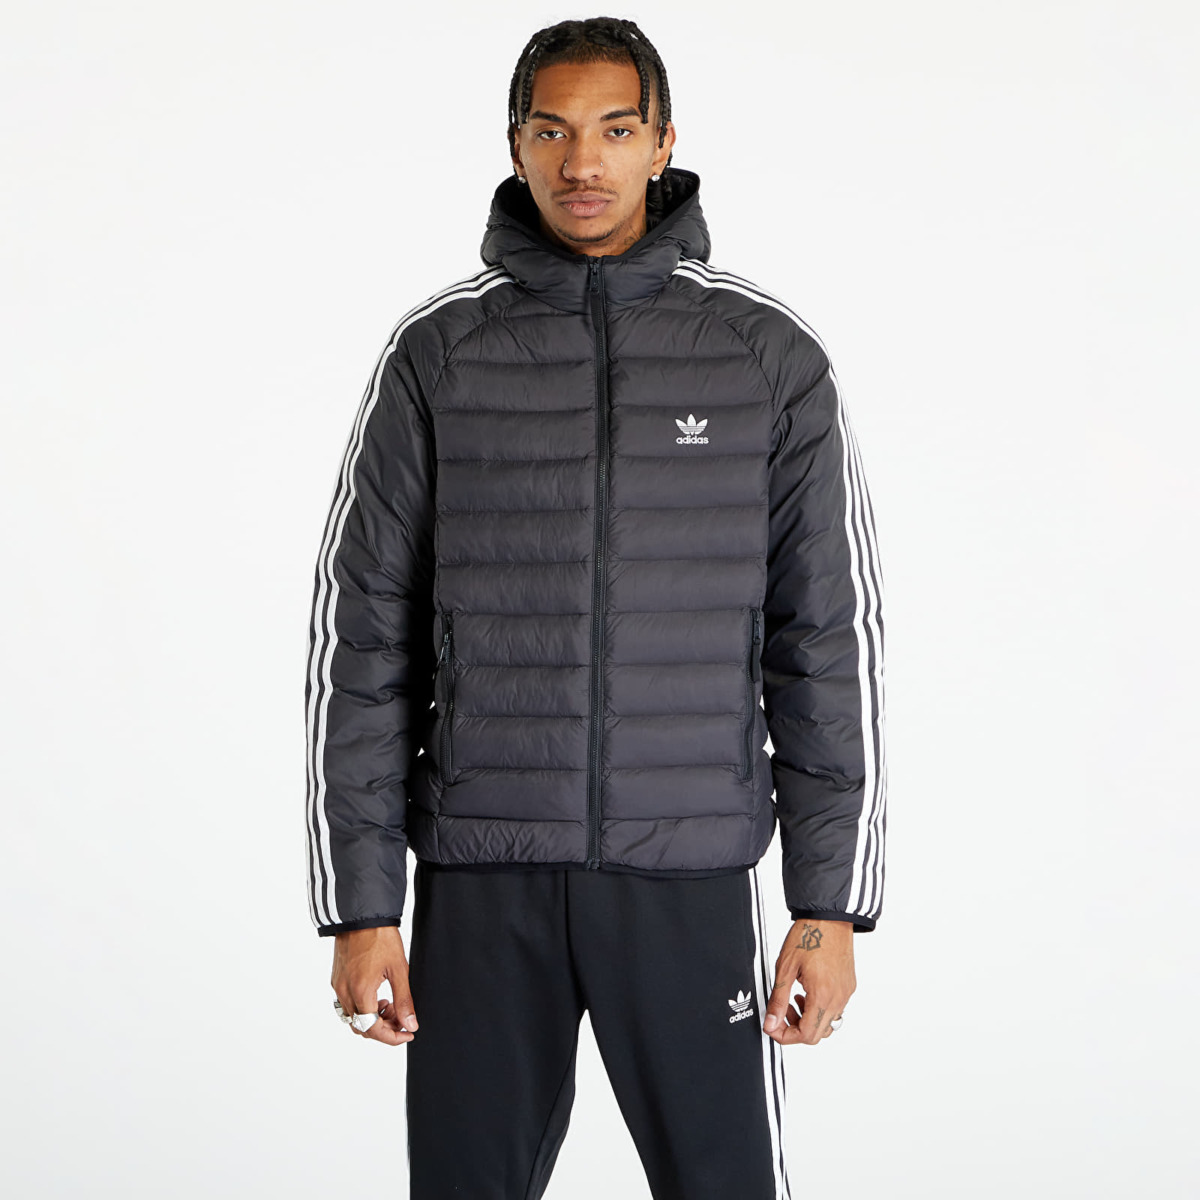 Footshop - Gent Jacket in Black - Adidas GOOFASH